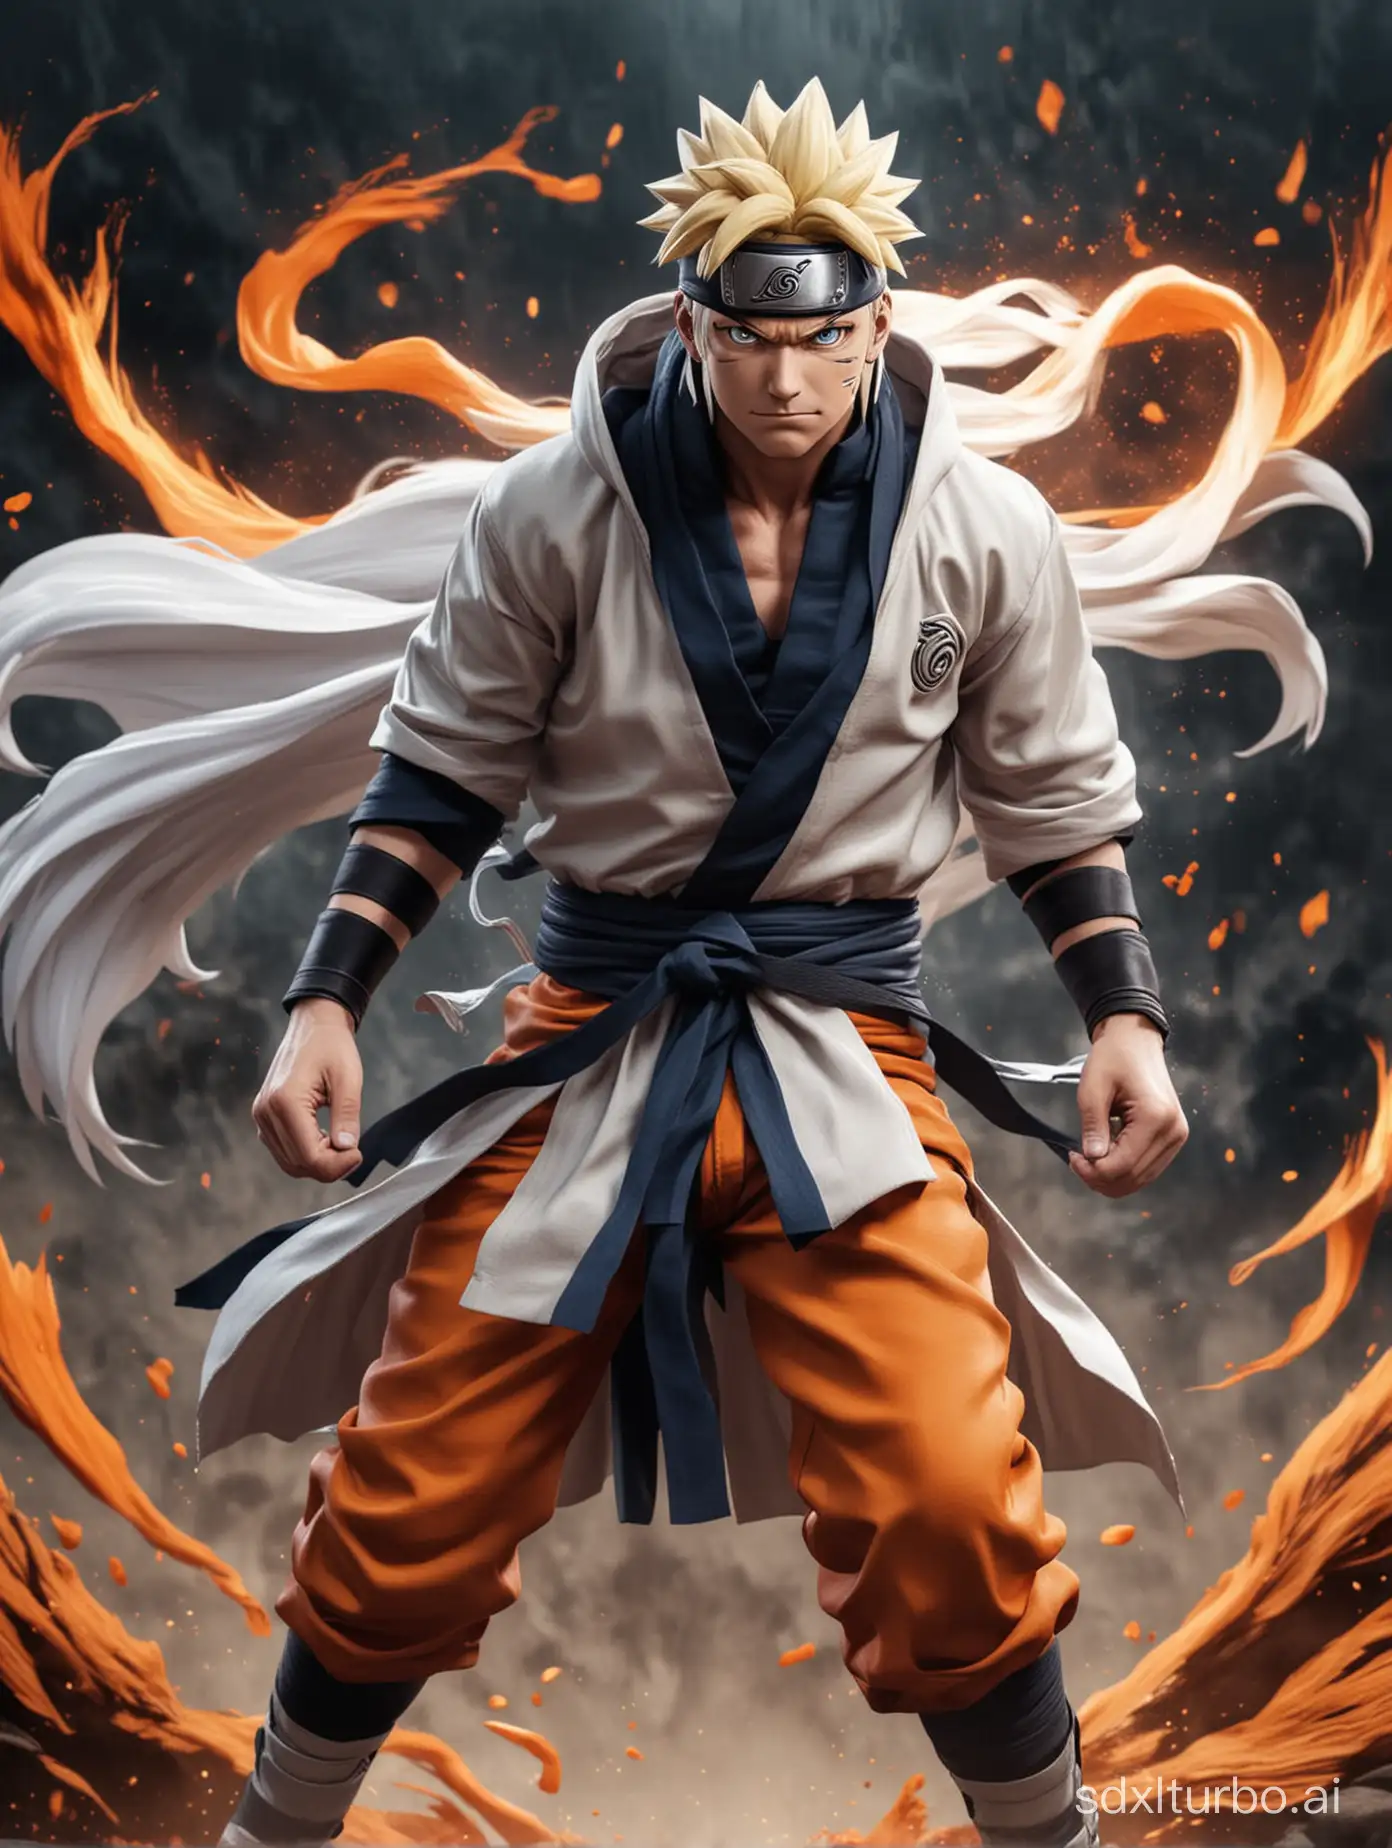 Hokage Naruto at Ultra Instinct Mode